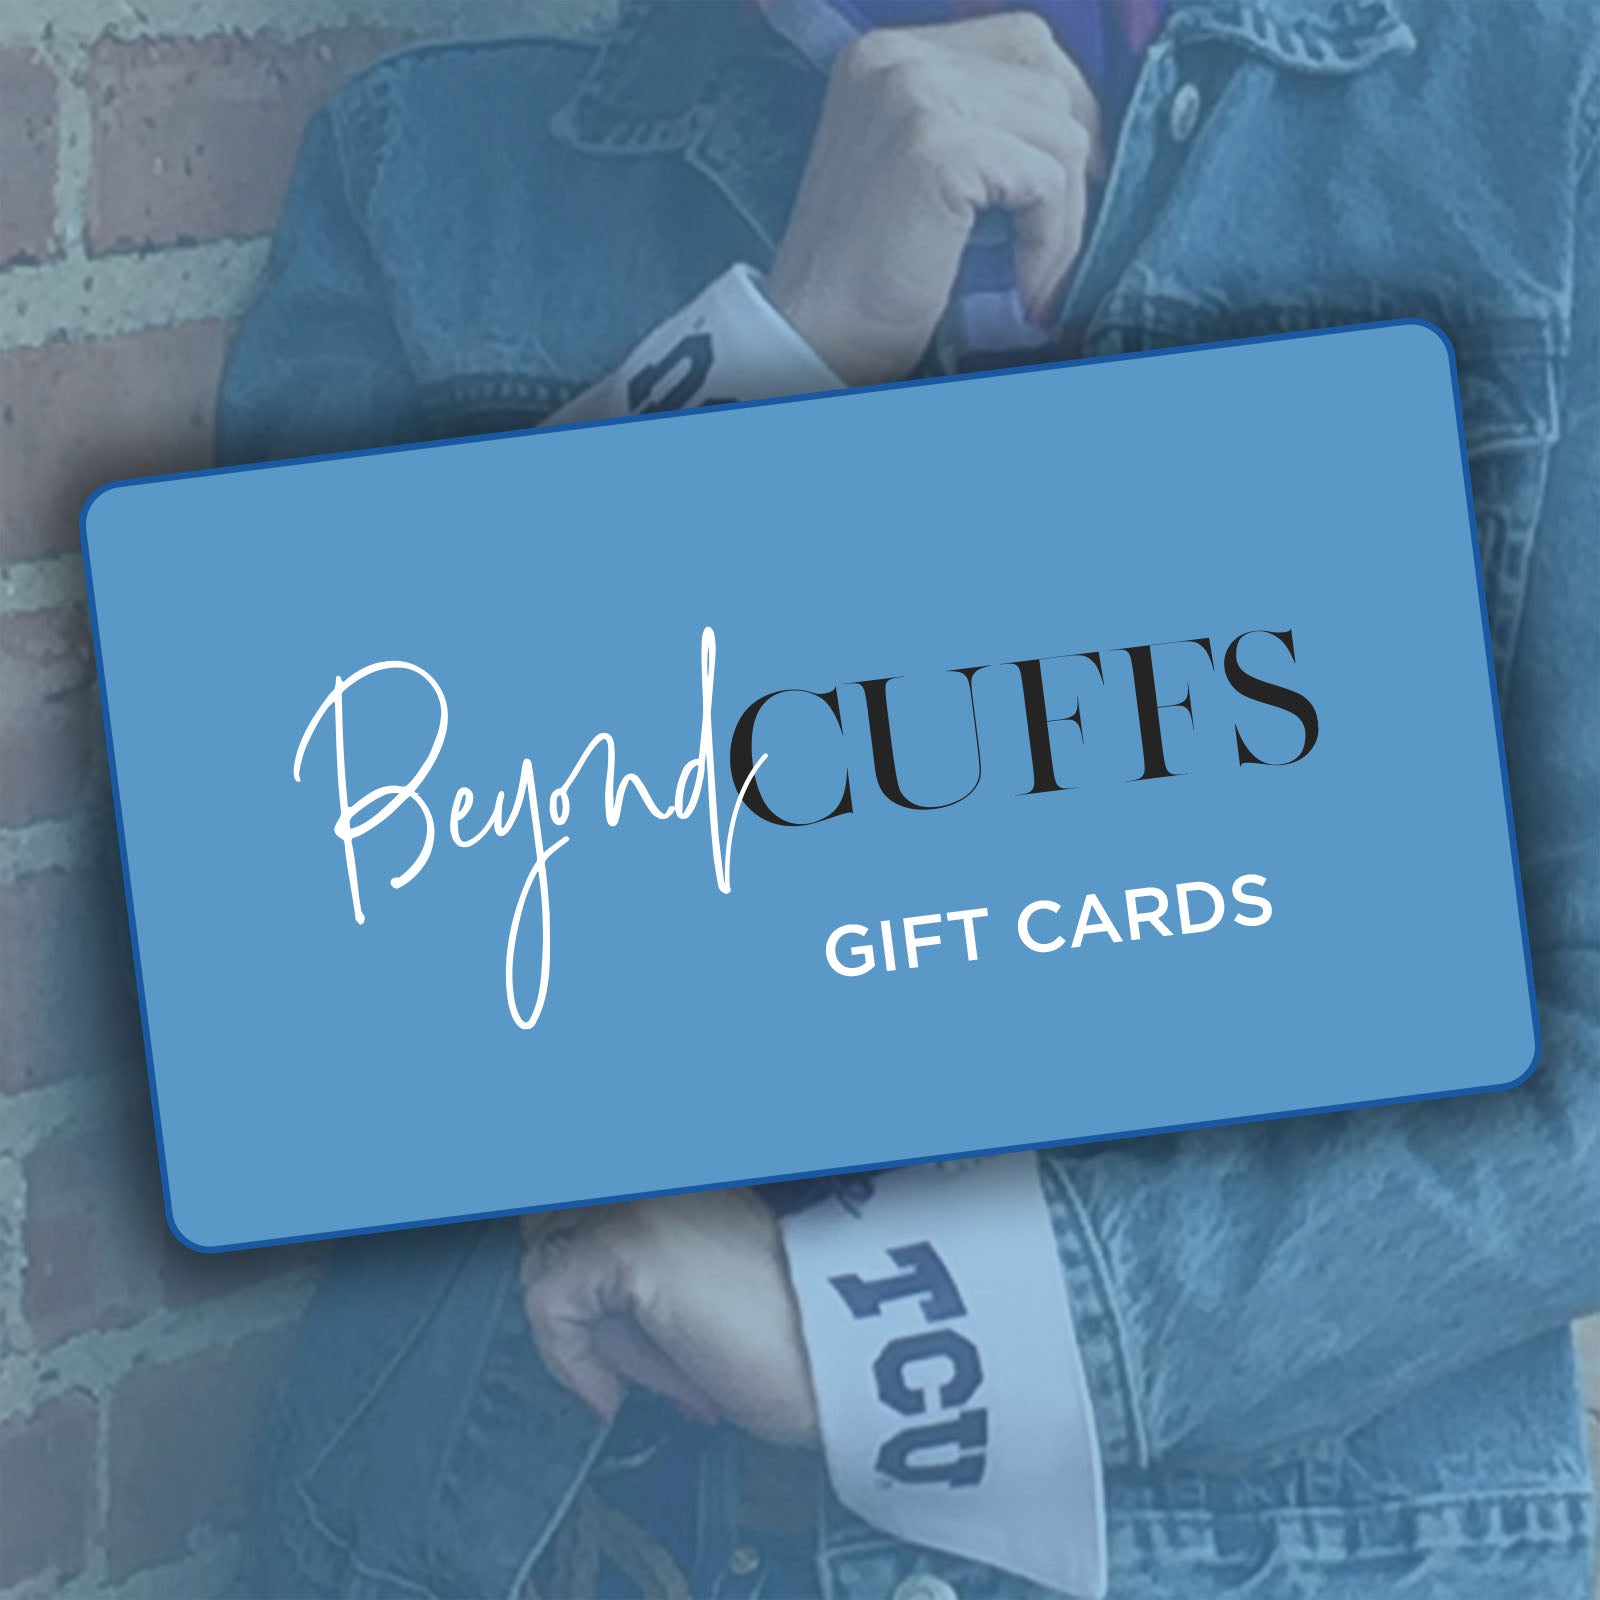 Beyond Cuffs Gift Card